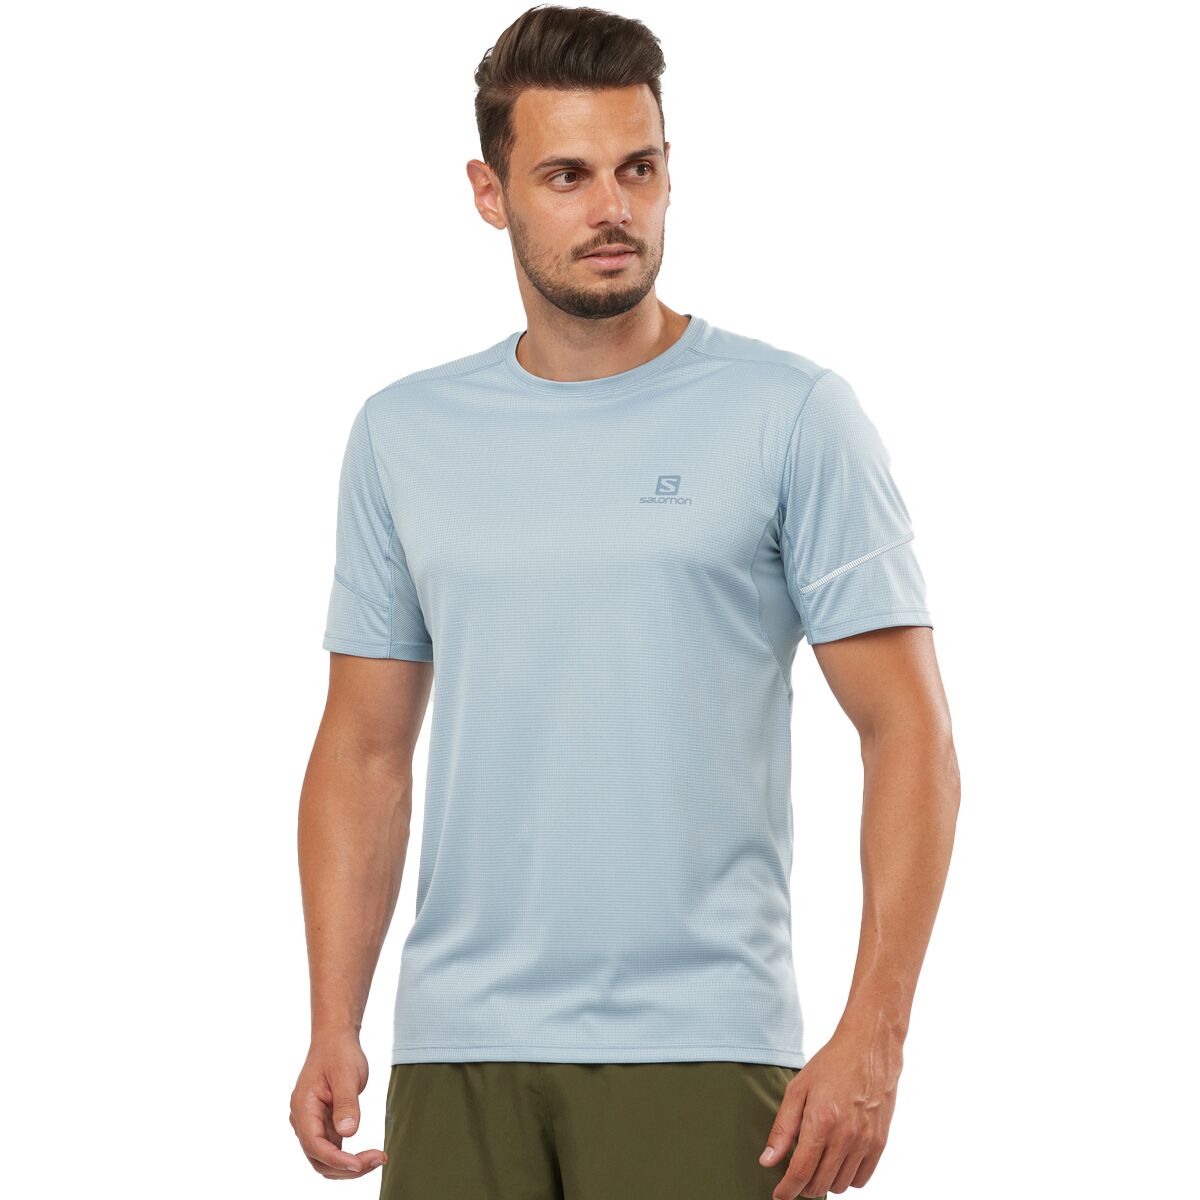 Salomon Agile Short-Sleeve Shirt - Men's - Clothing